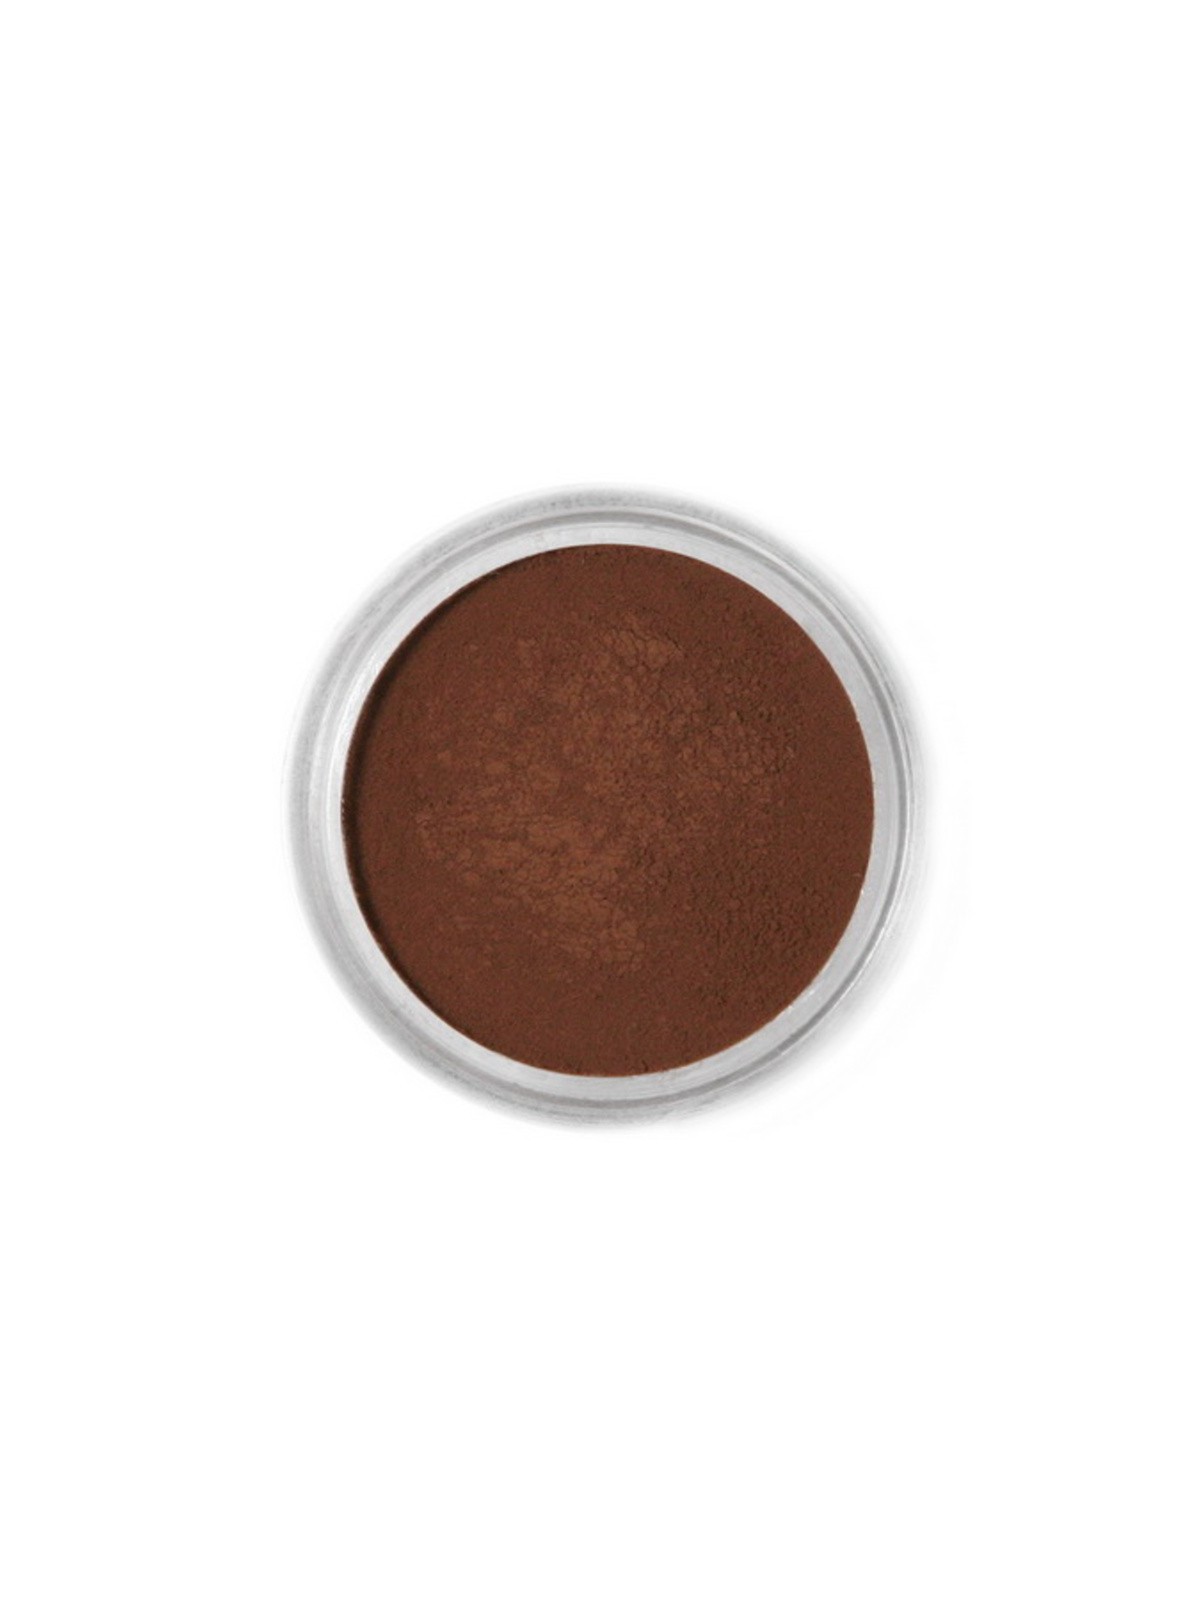 Jedlá prachová farba Fractal - hnědá - Dark Chocolate, Étcsokoládé (1,5 g)